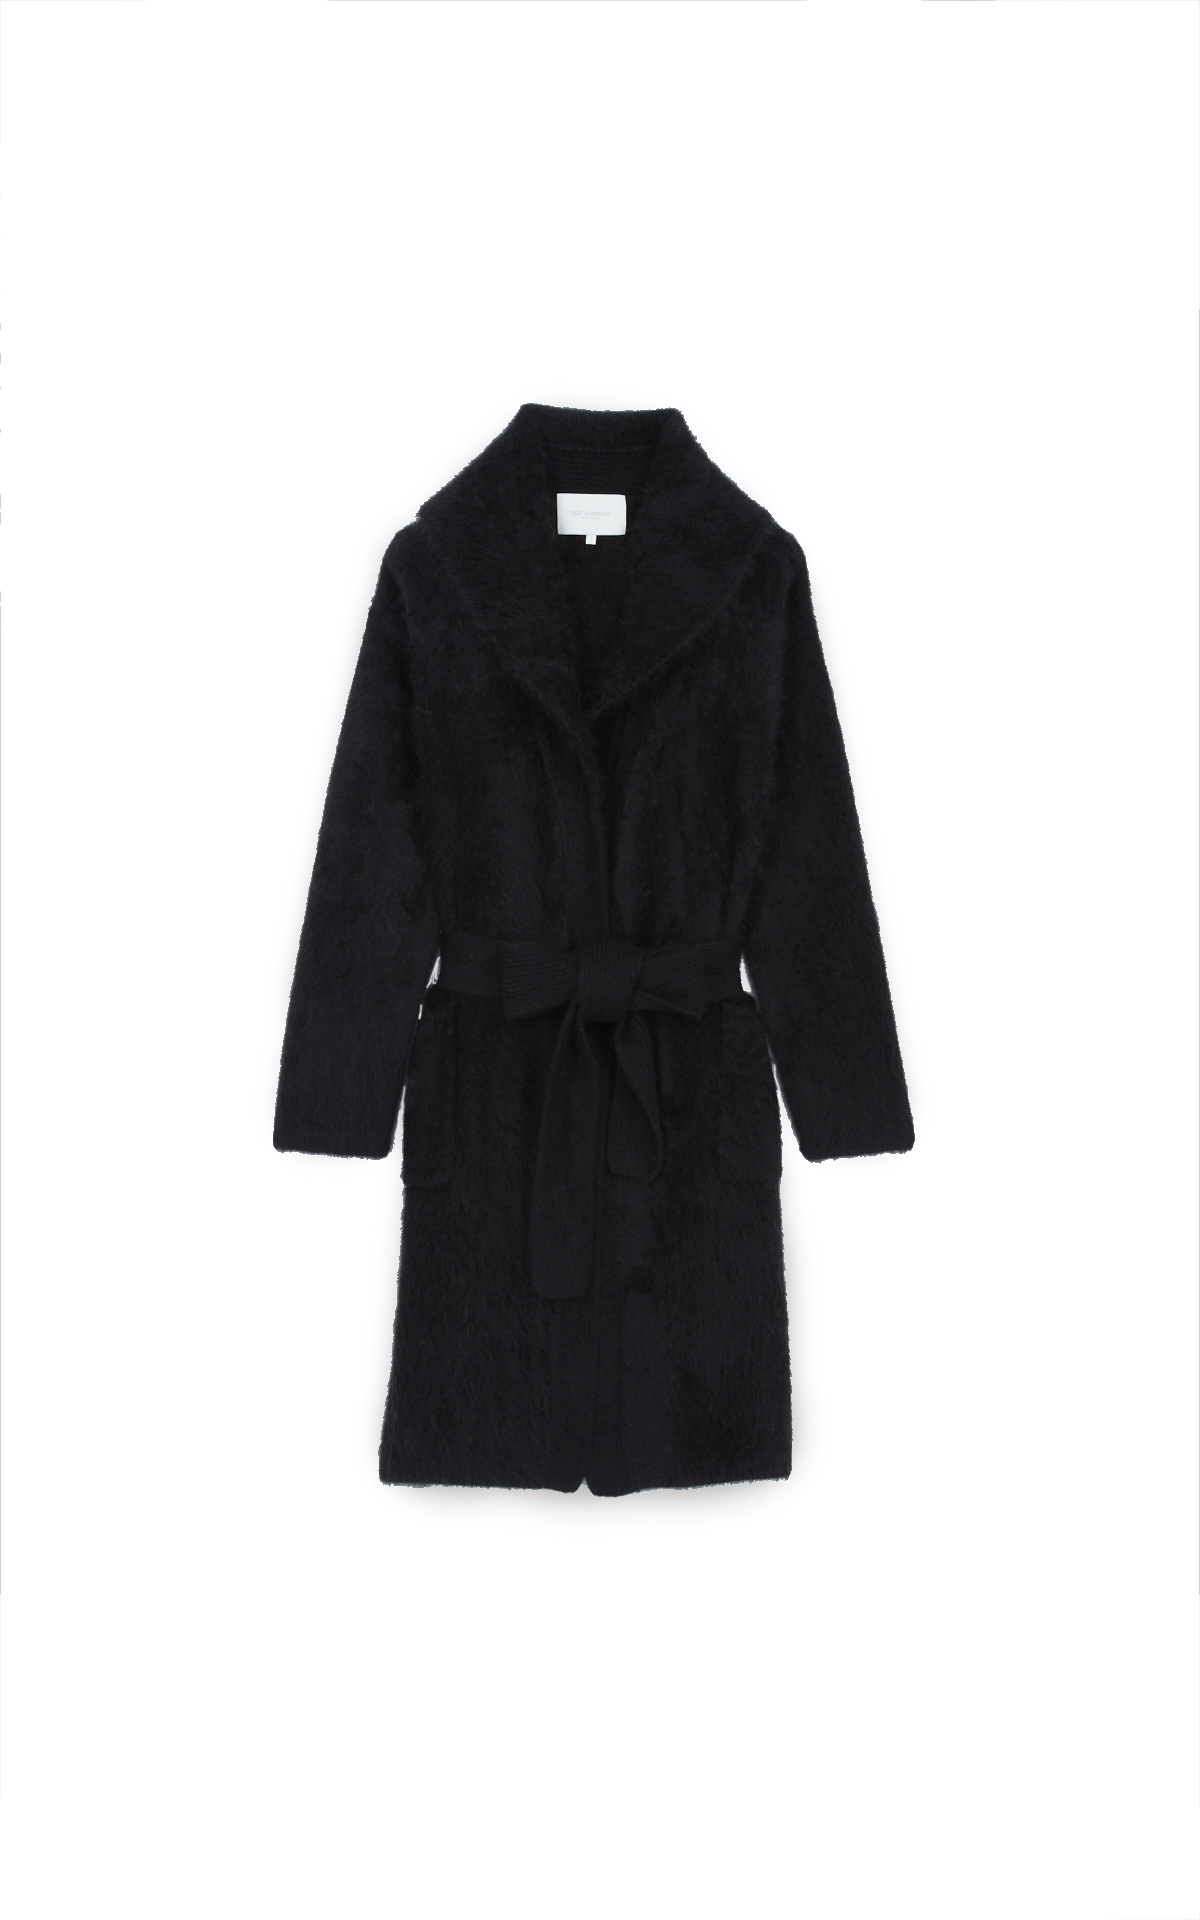 Black brushed cashmere coat*